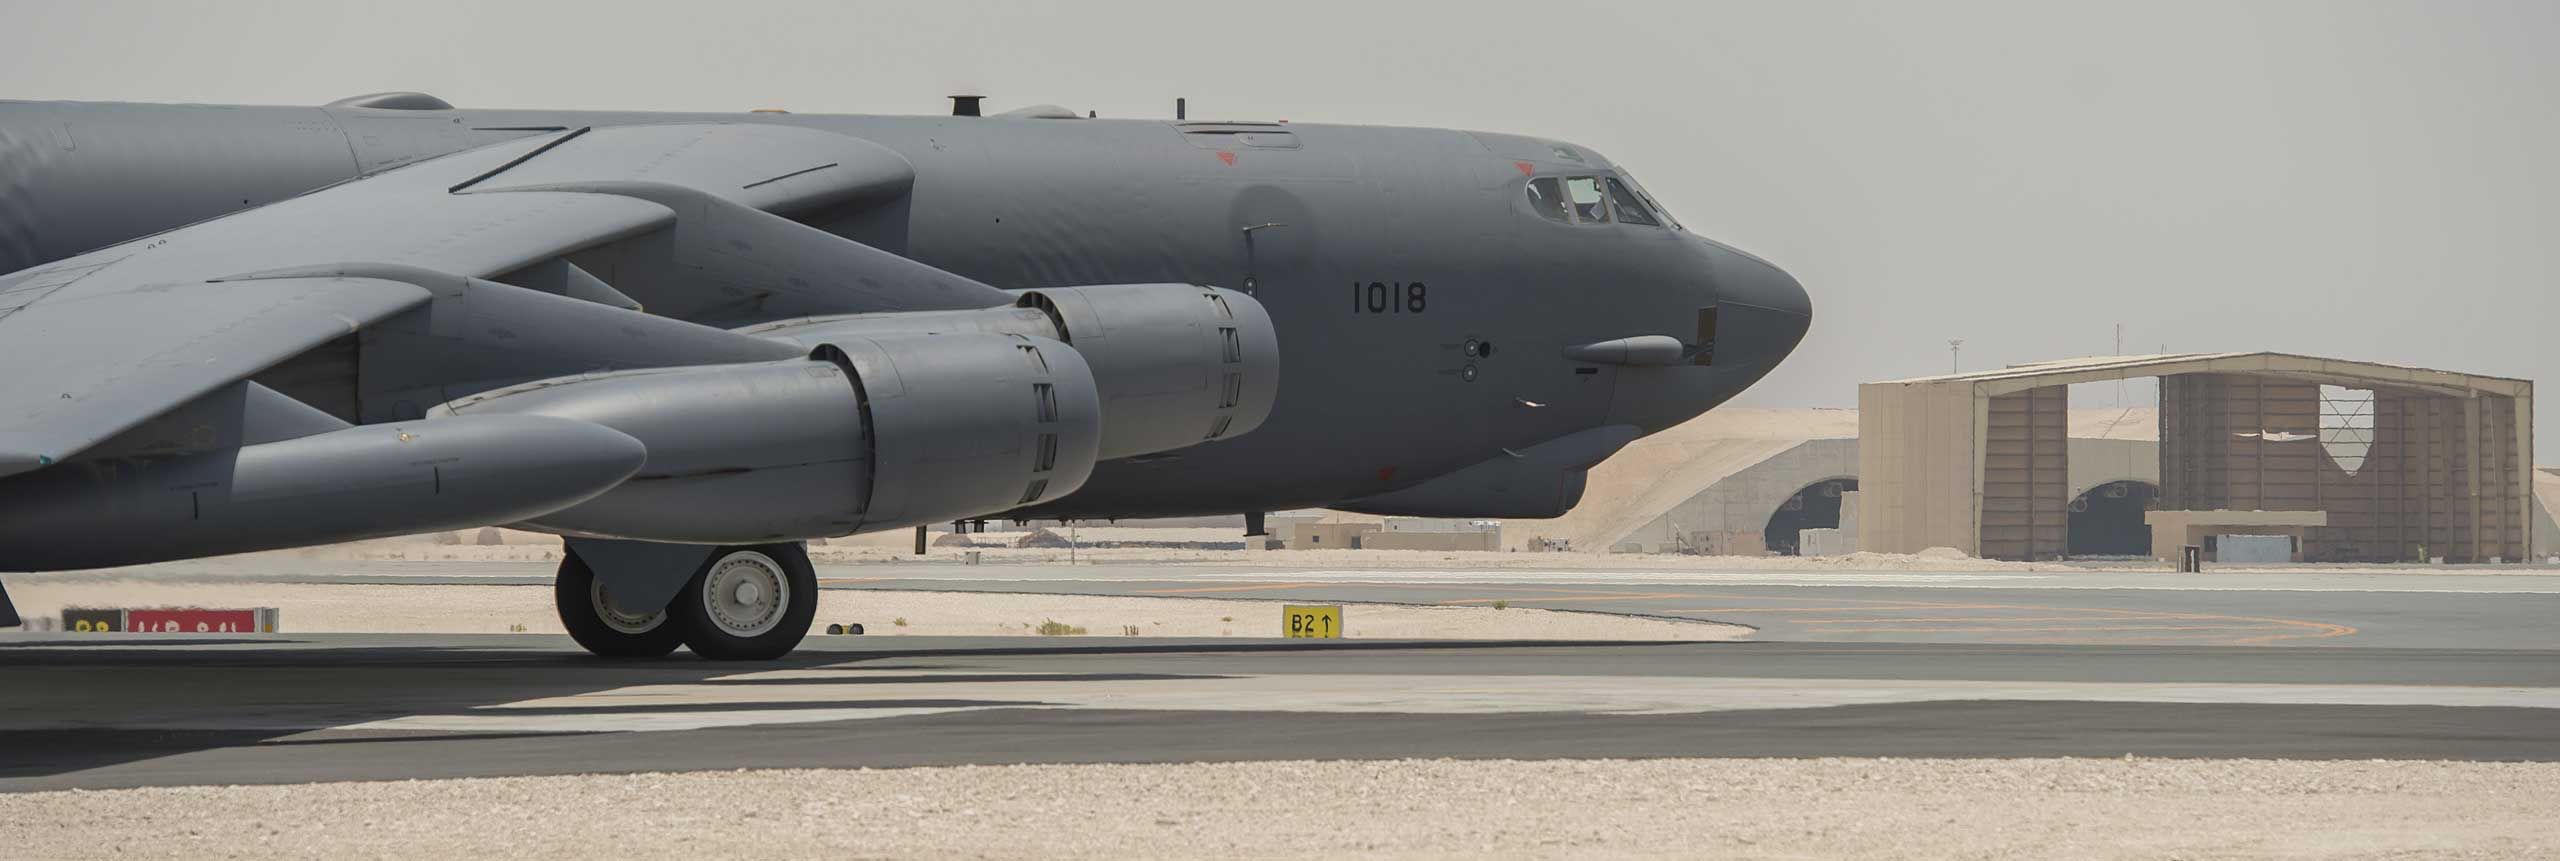 Meet the B-21 Raider - America's First New, Long-range Strike Bomber